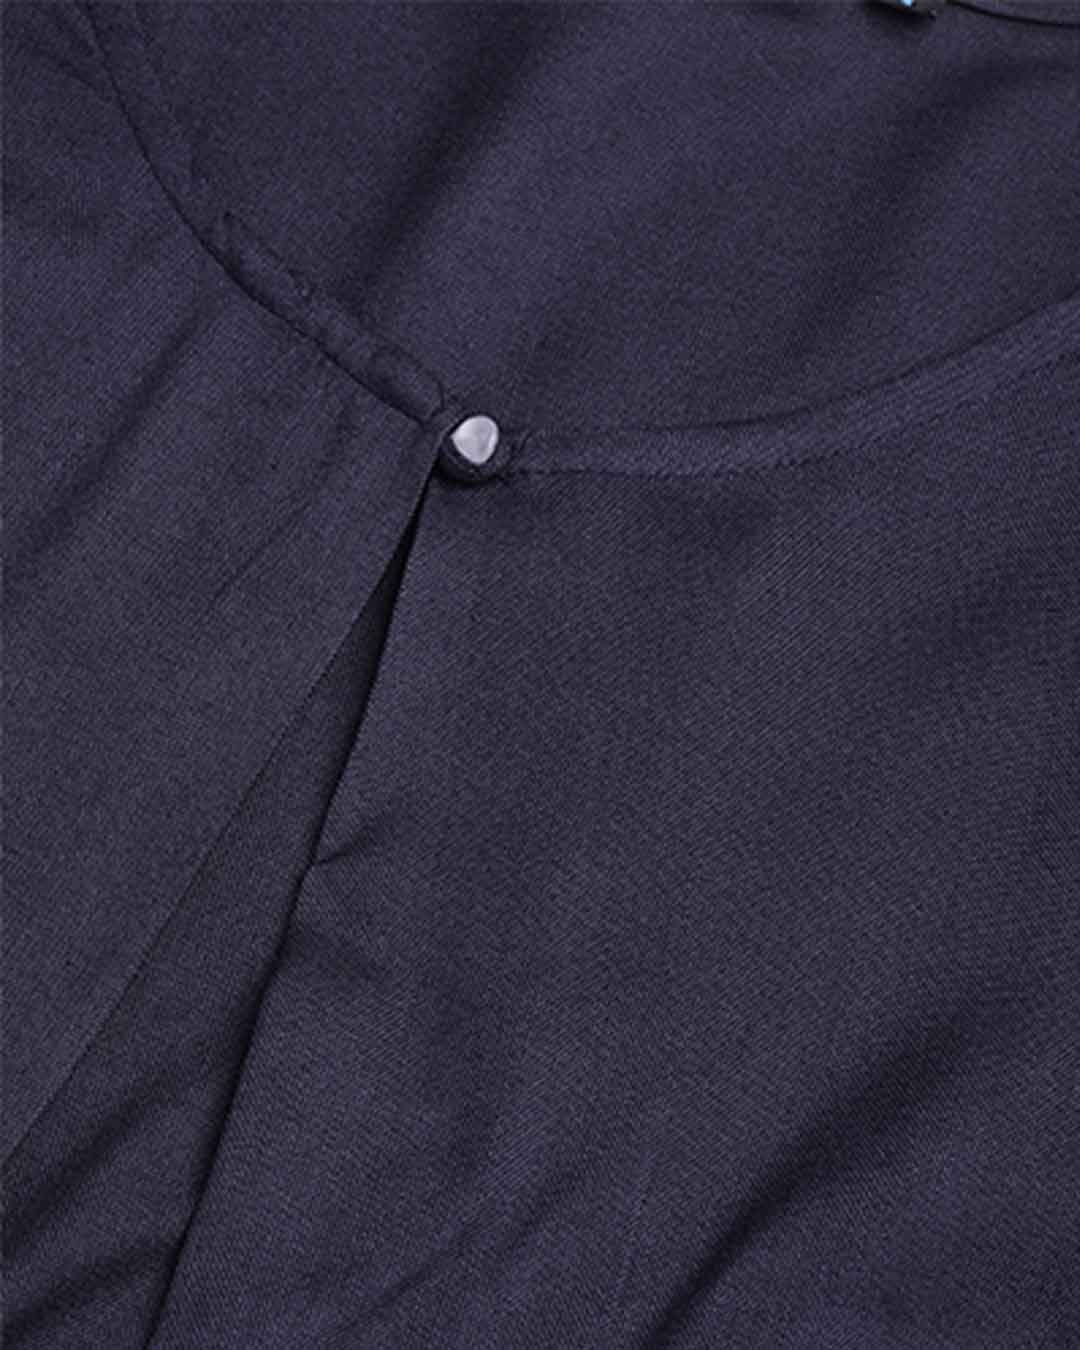 Shop Women's Navy Blue Solid Button Shrug-Back